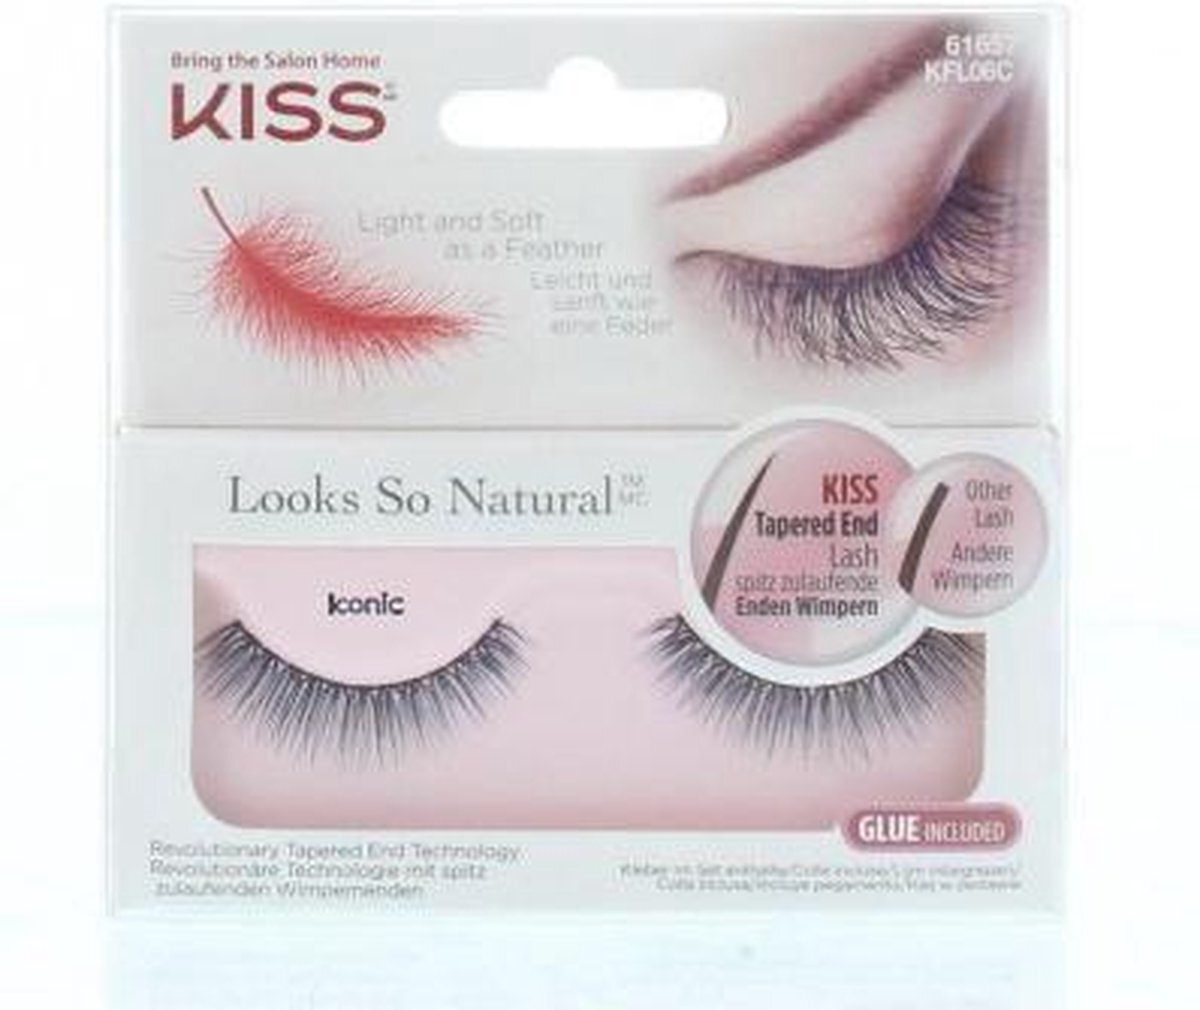 Kiss products Kiss Natural Lash, Iconic 61657 Kfl06c